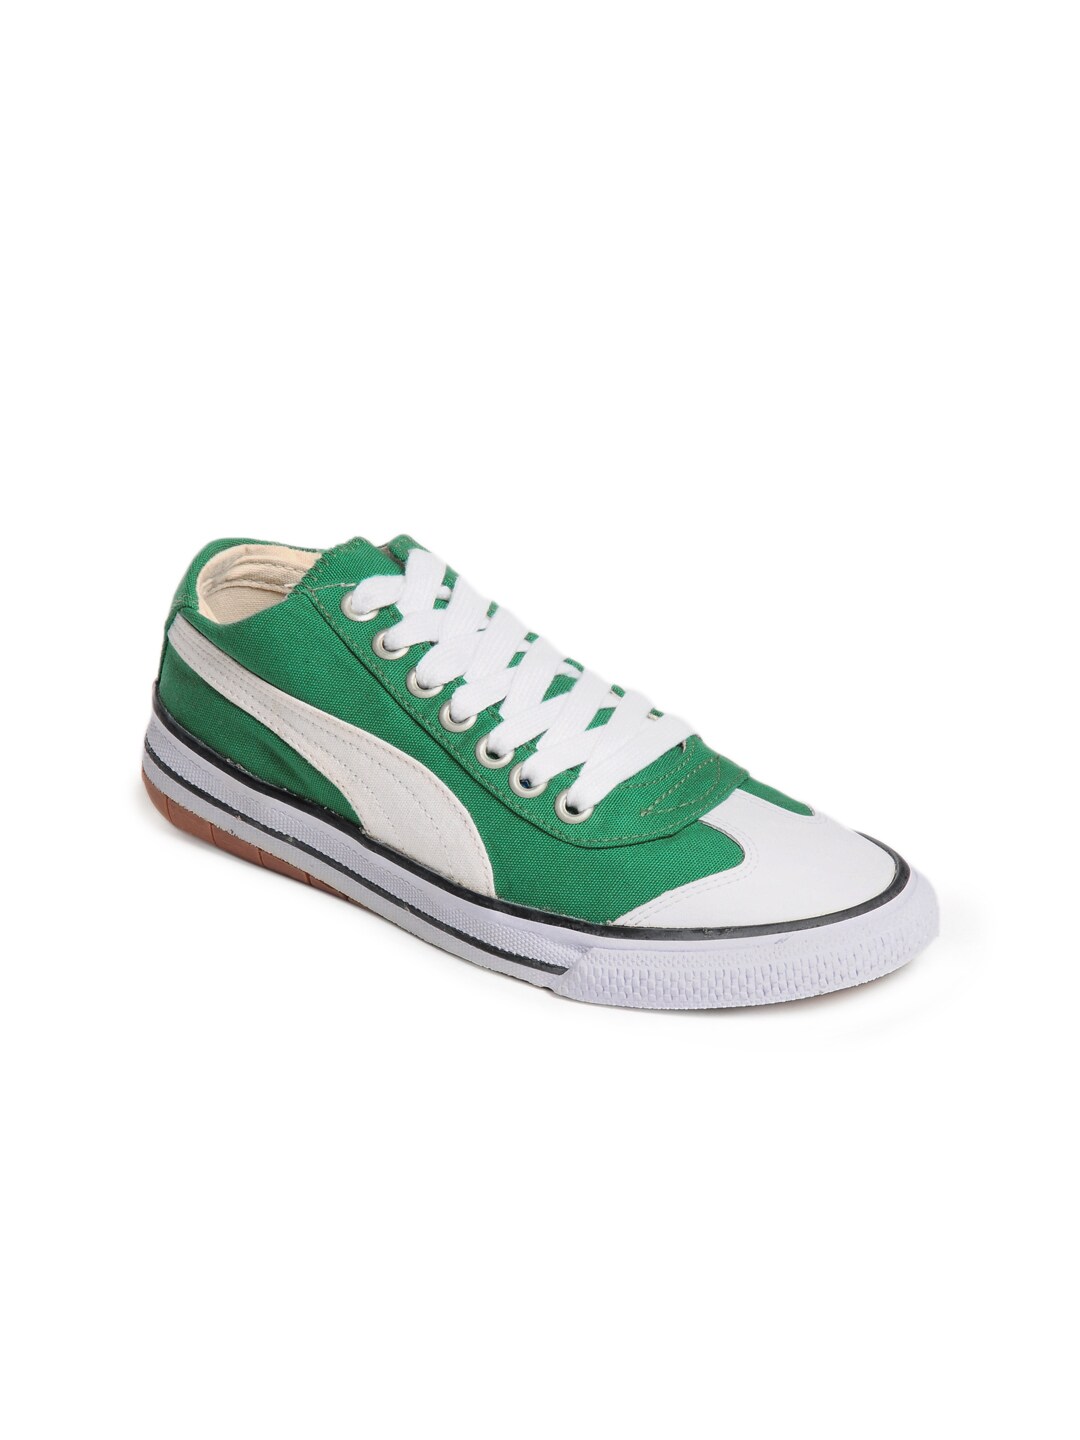 Puma Unisex 917 Lo Green & White Shoes